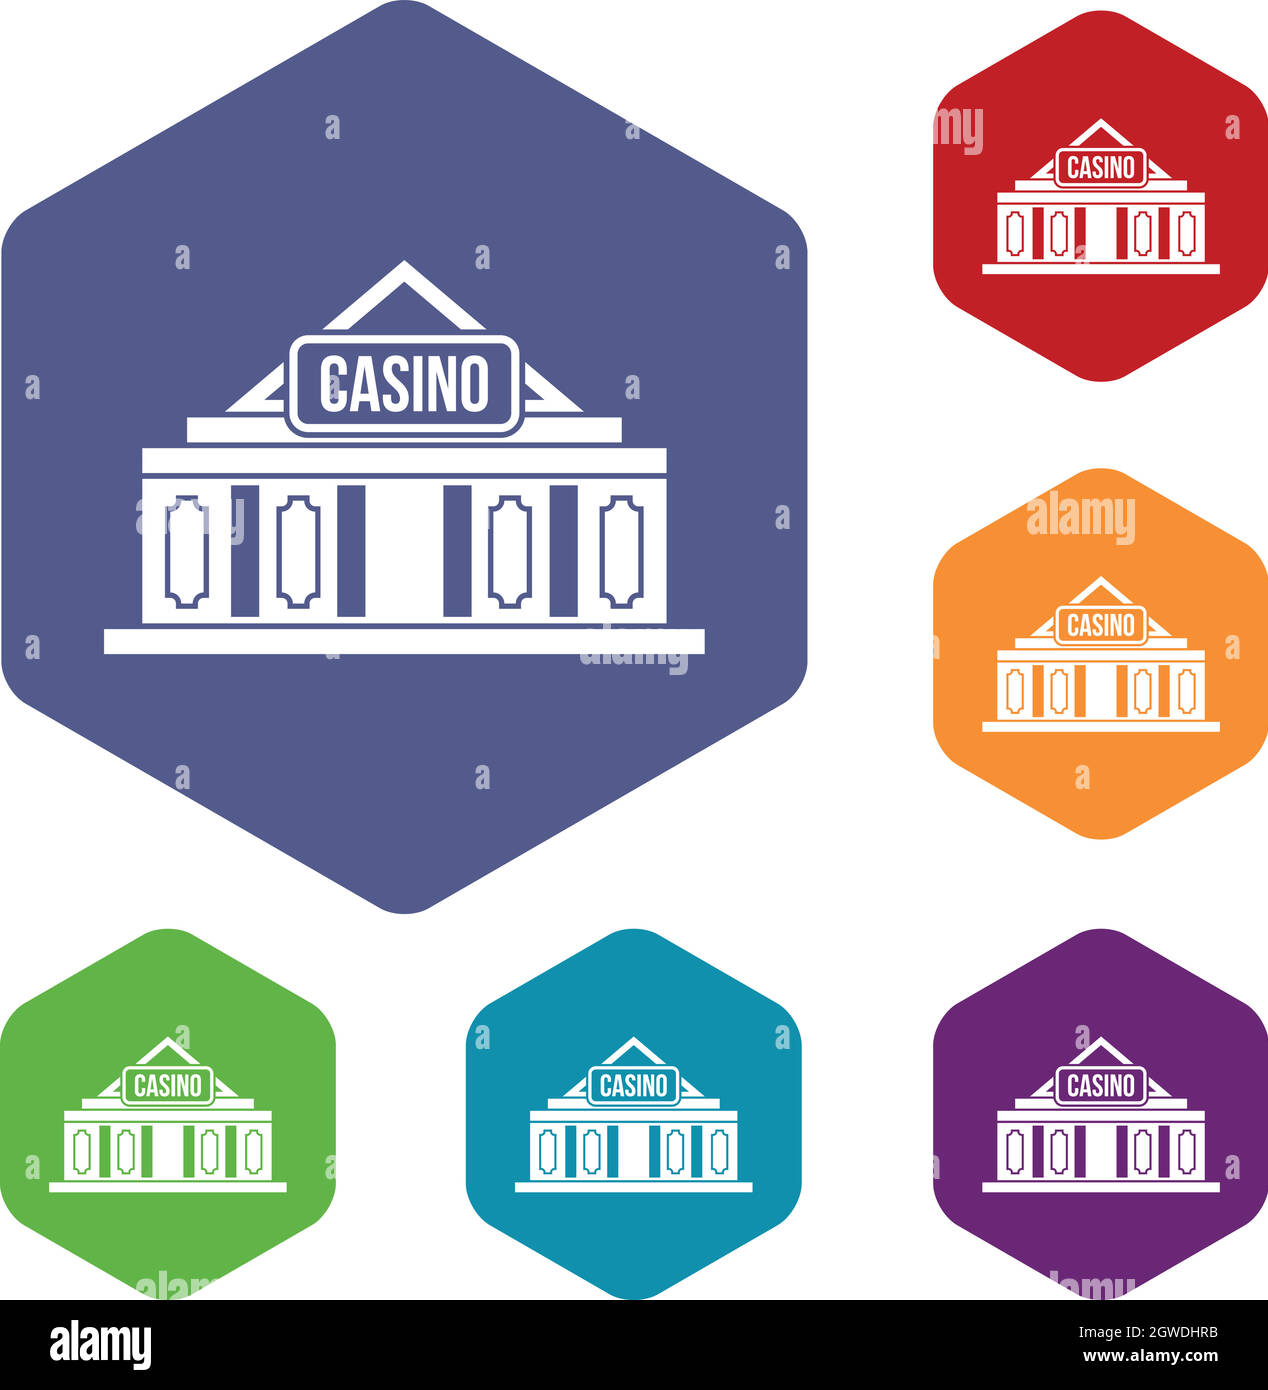 Casino building icons set Stock Vector